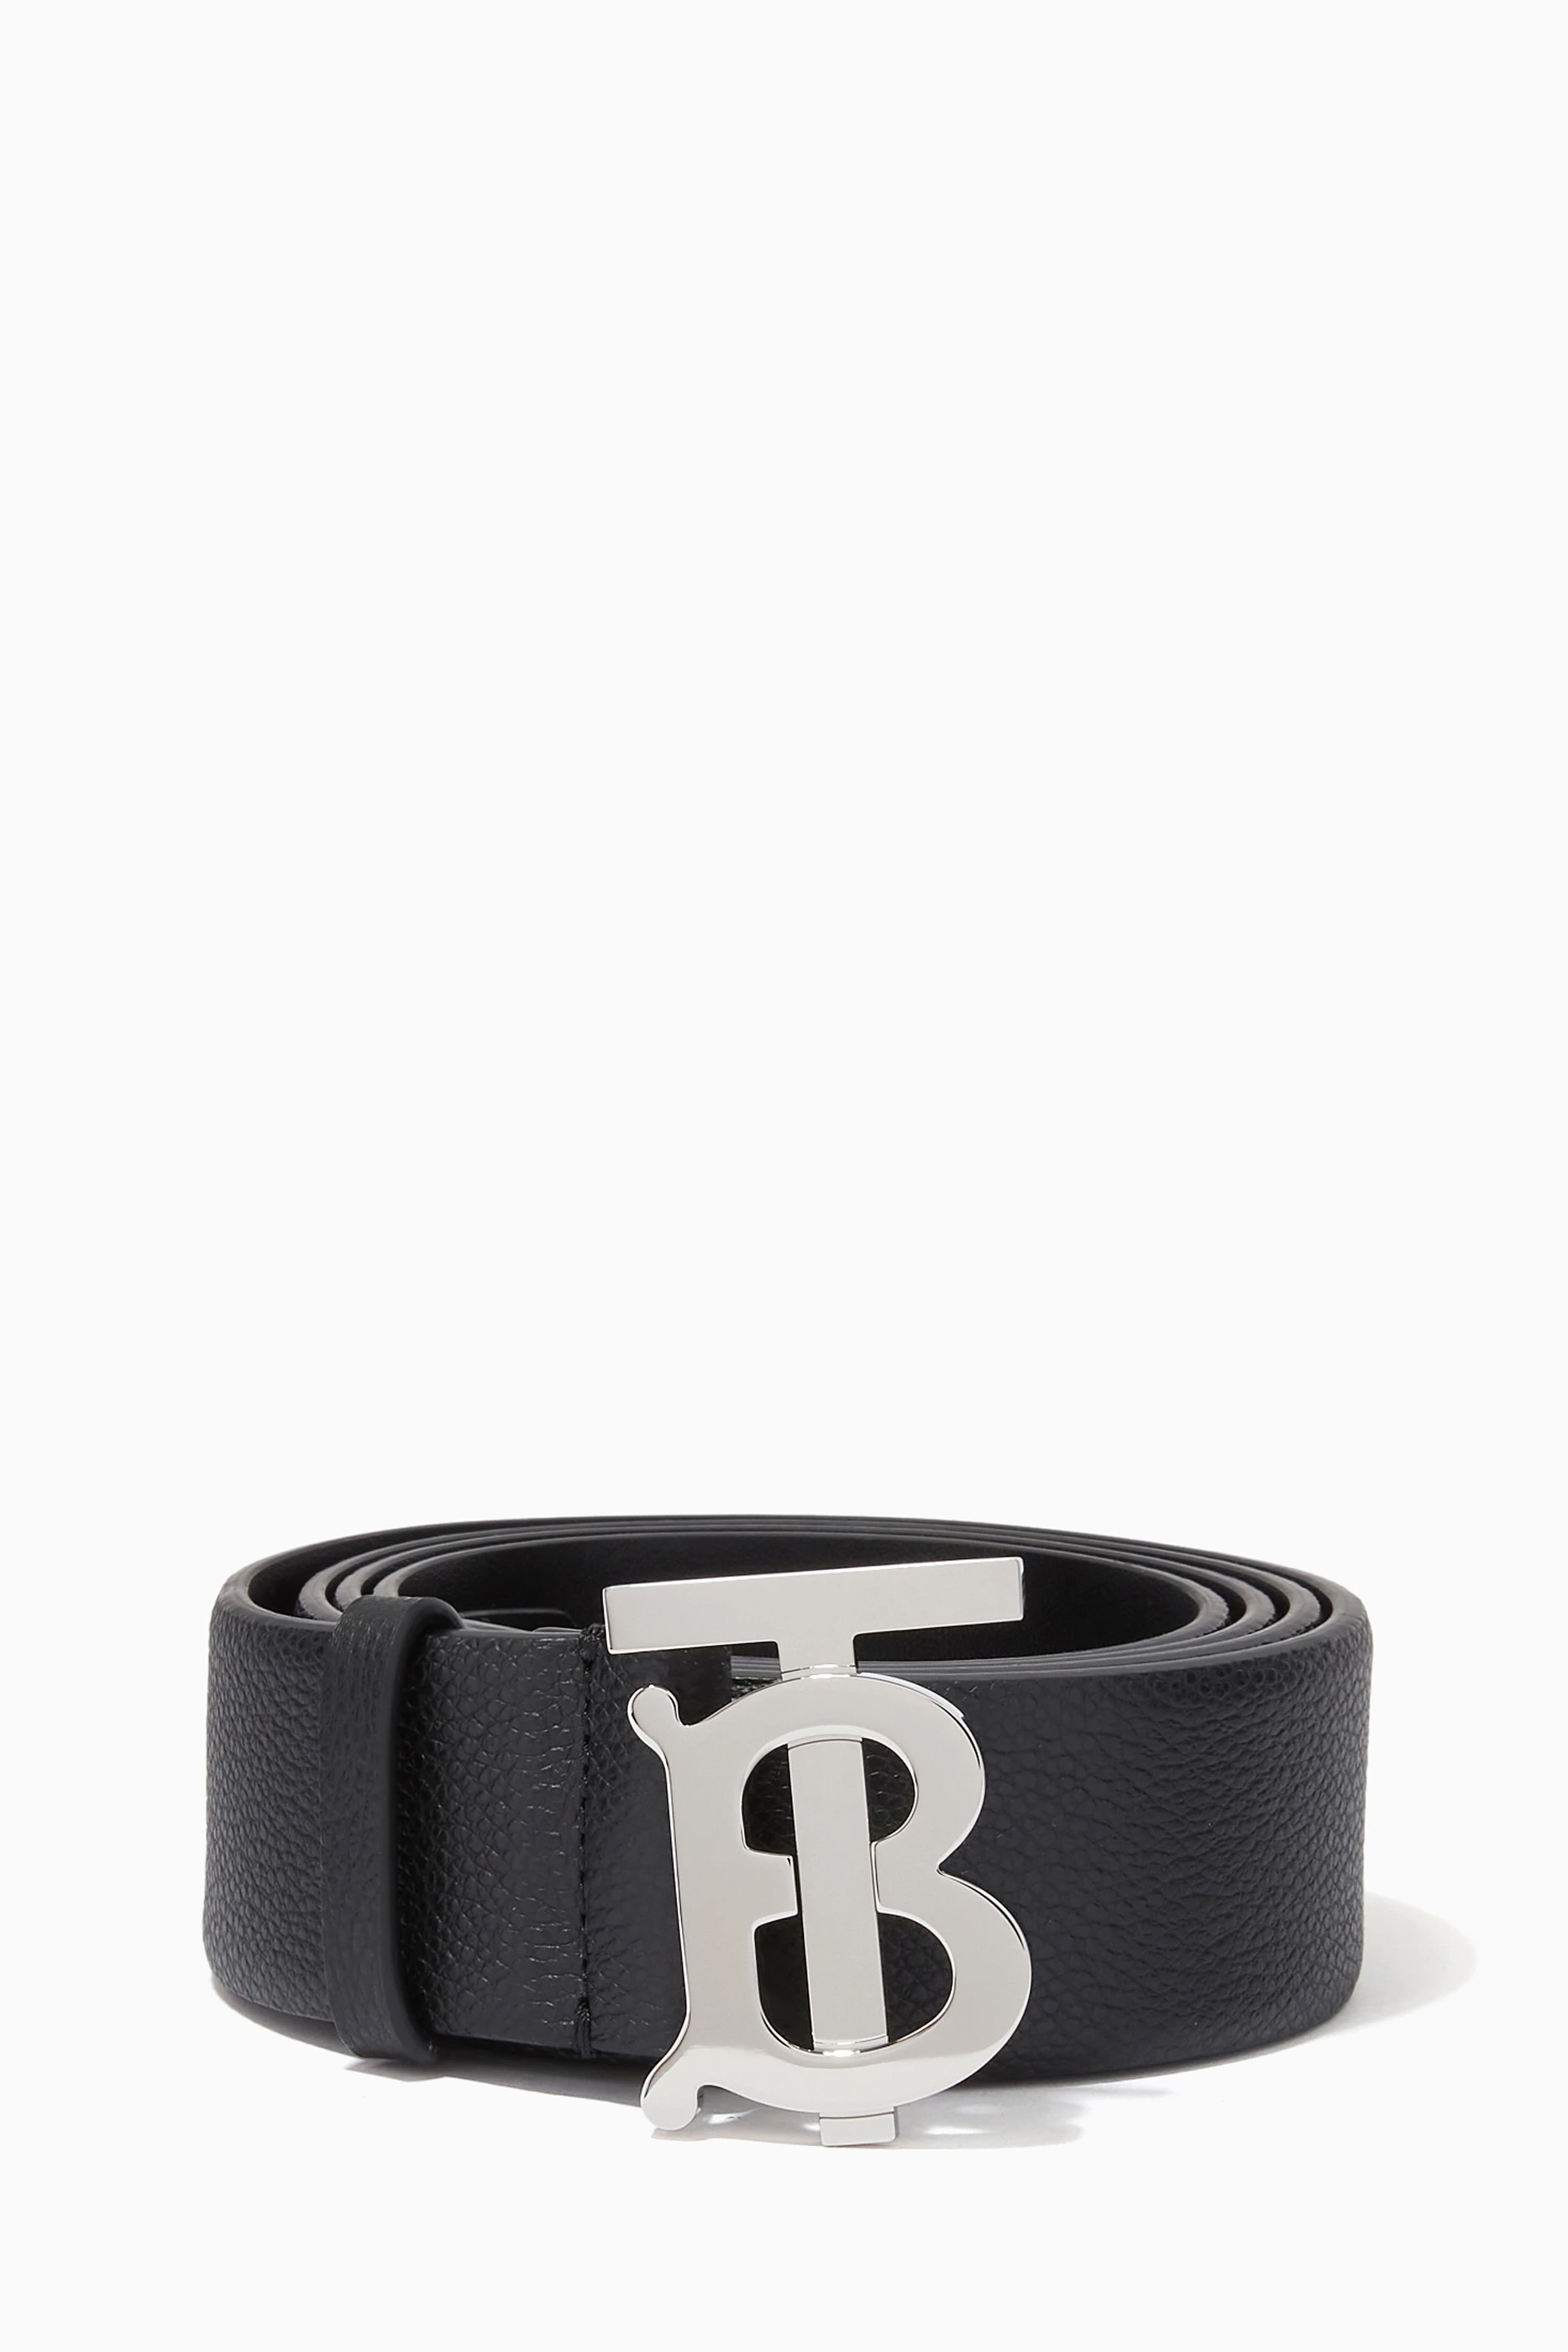 Burberry Black Ladies TB Motif Tonal Leather Belt, Brand Size